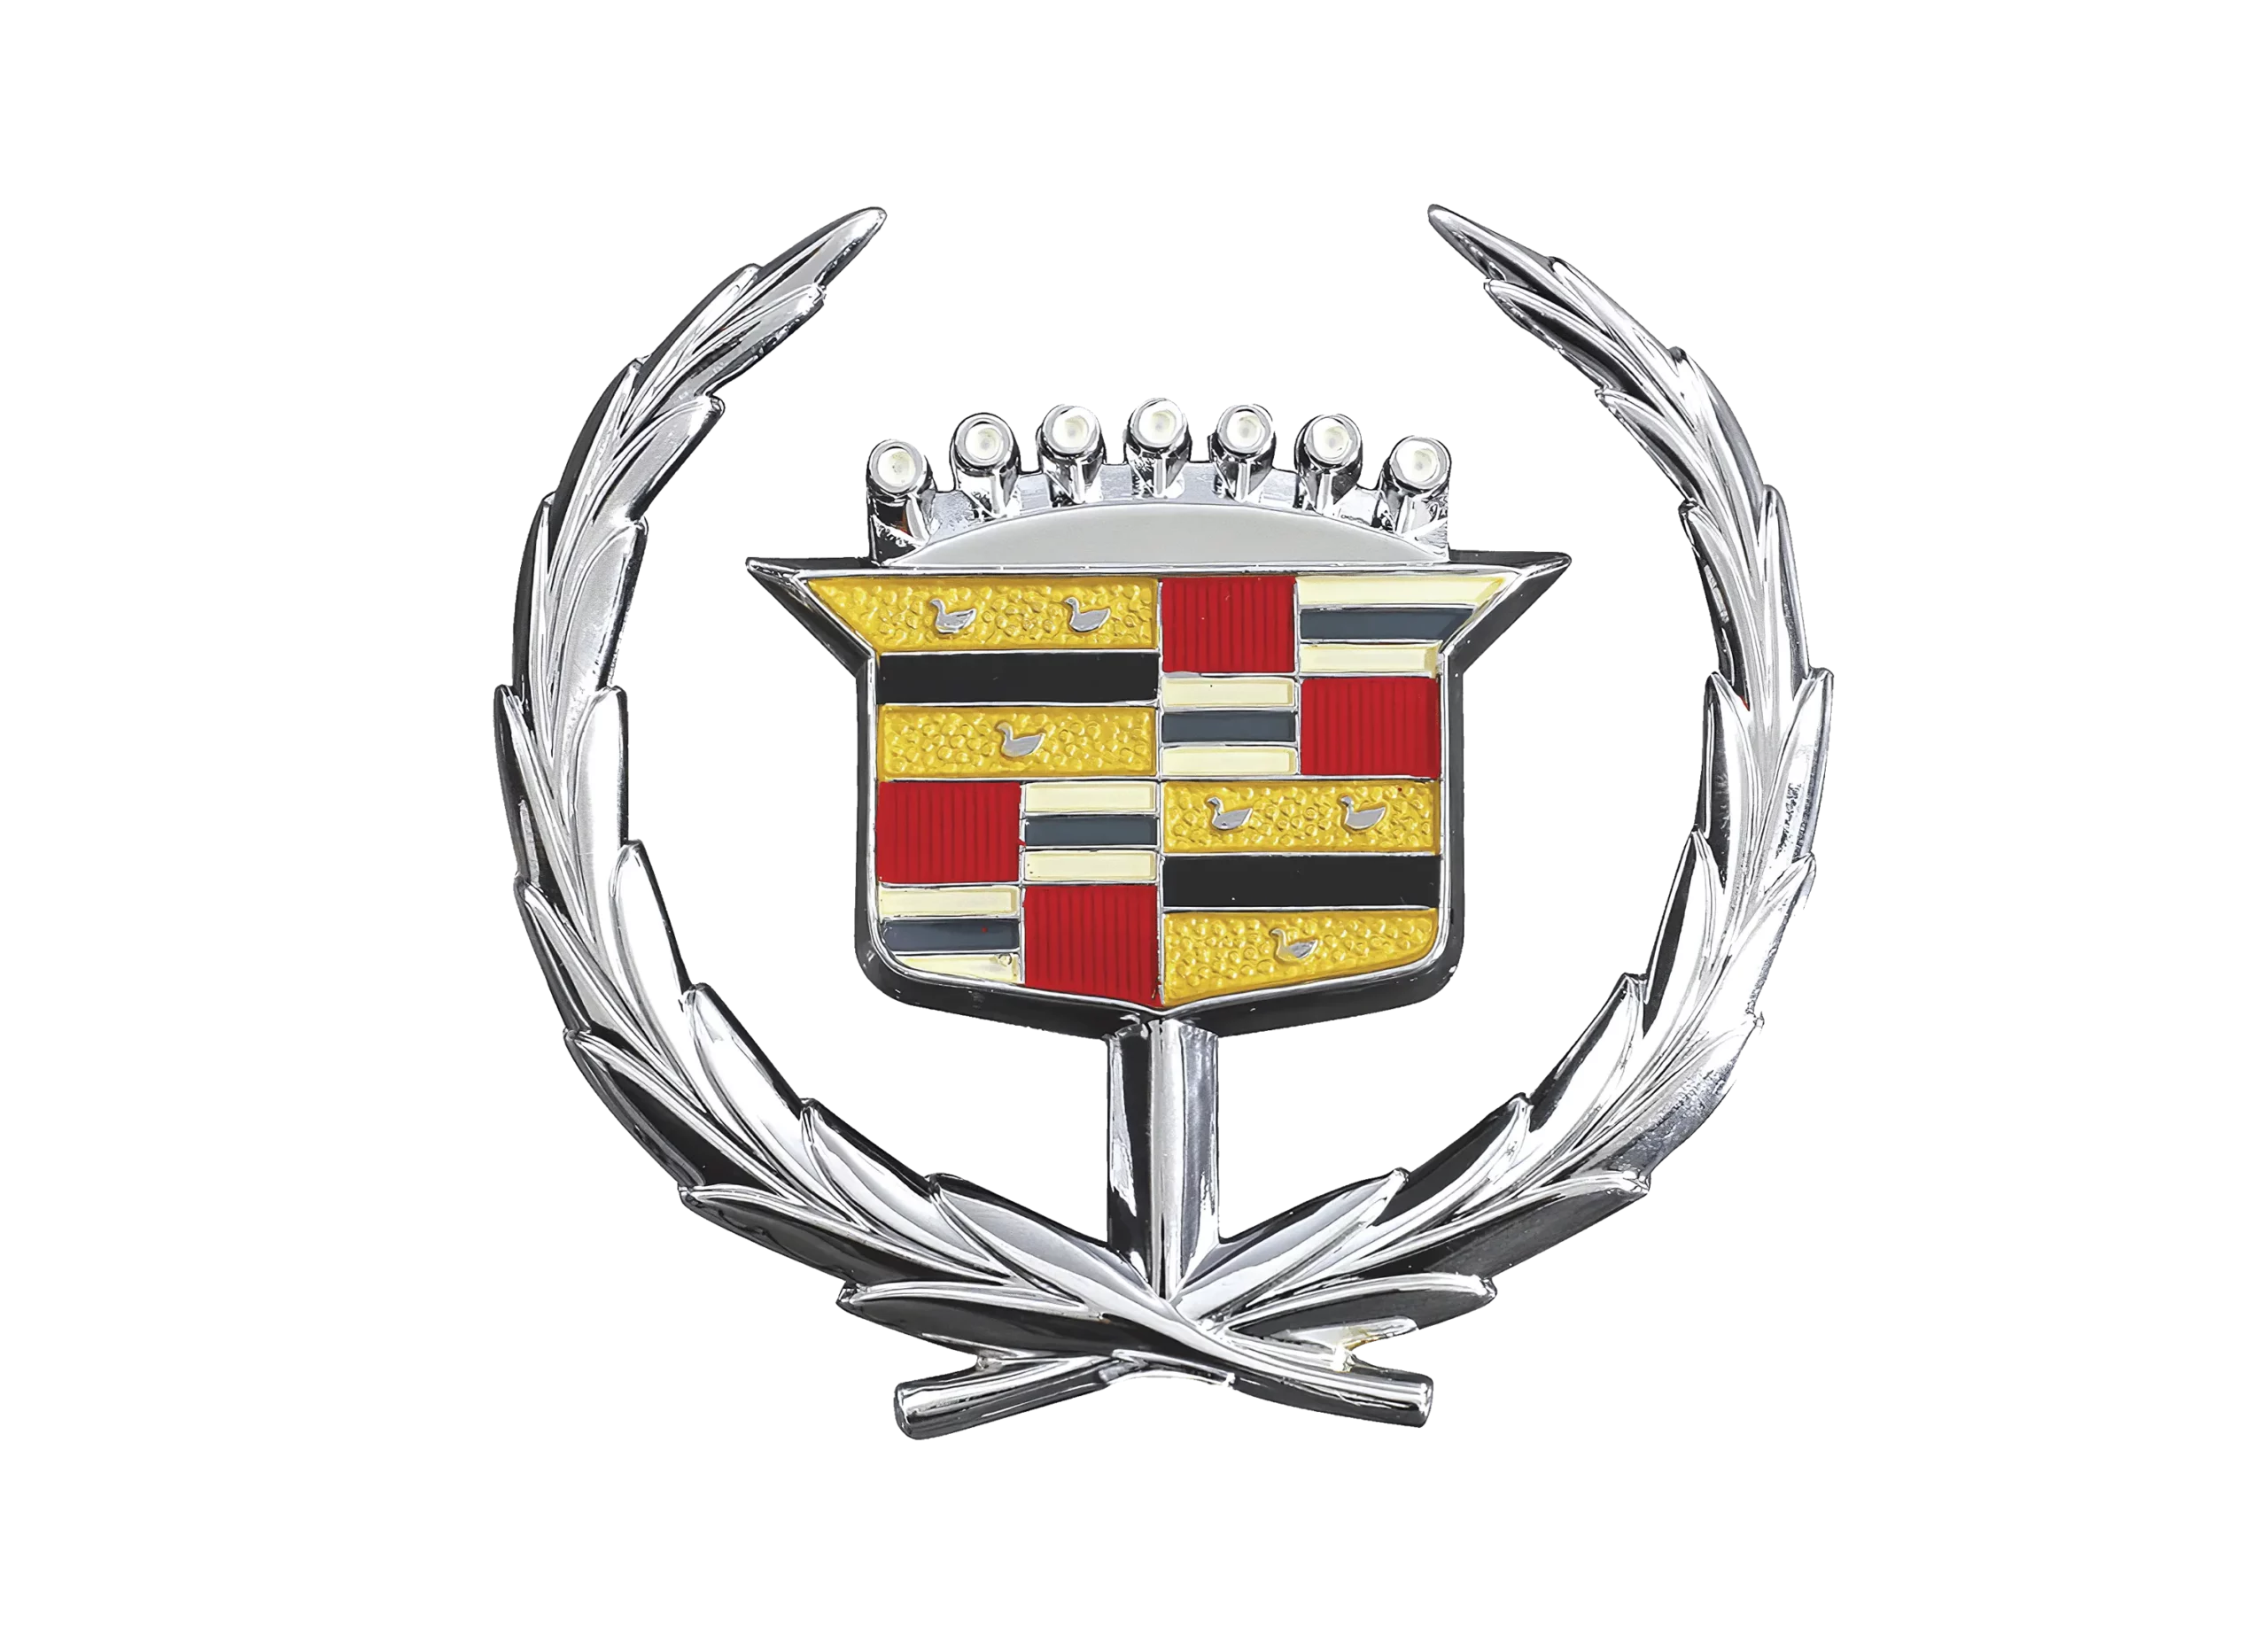 Cadillac logo 1963-1964